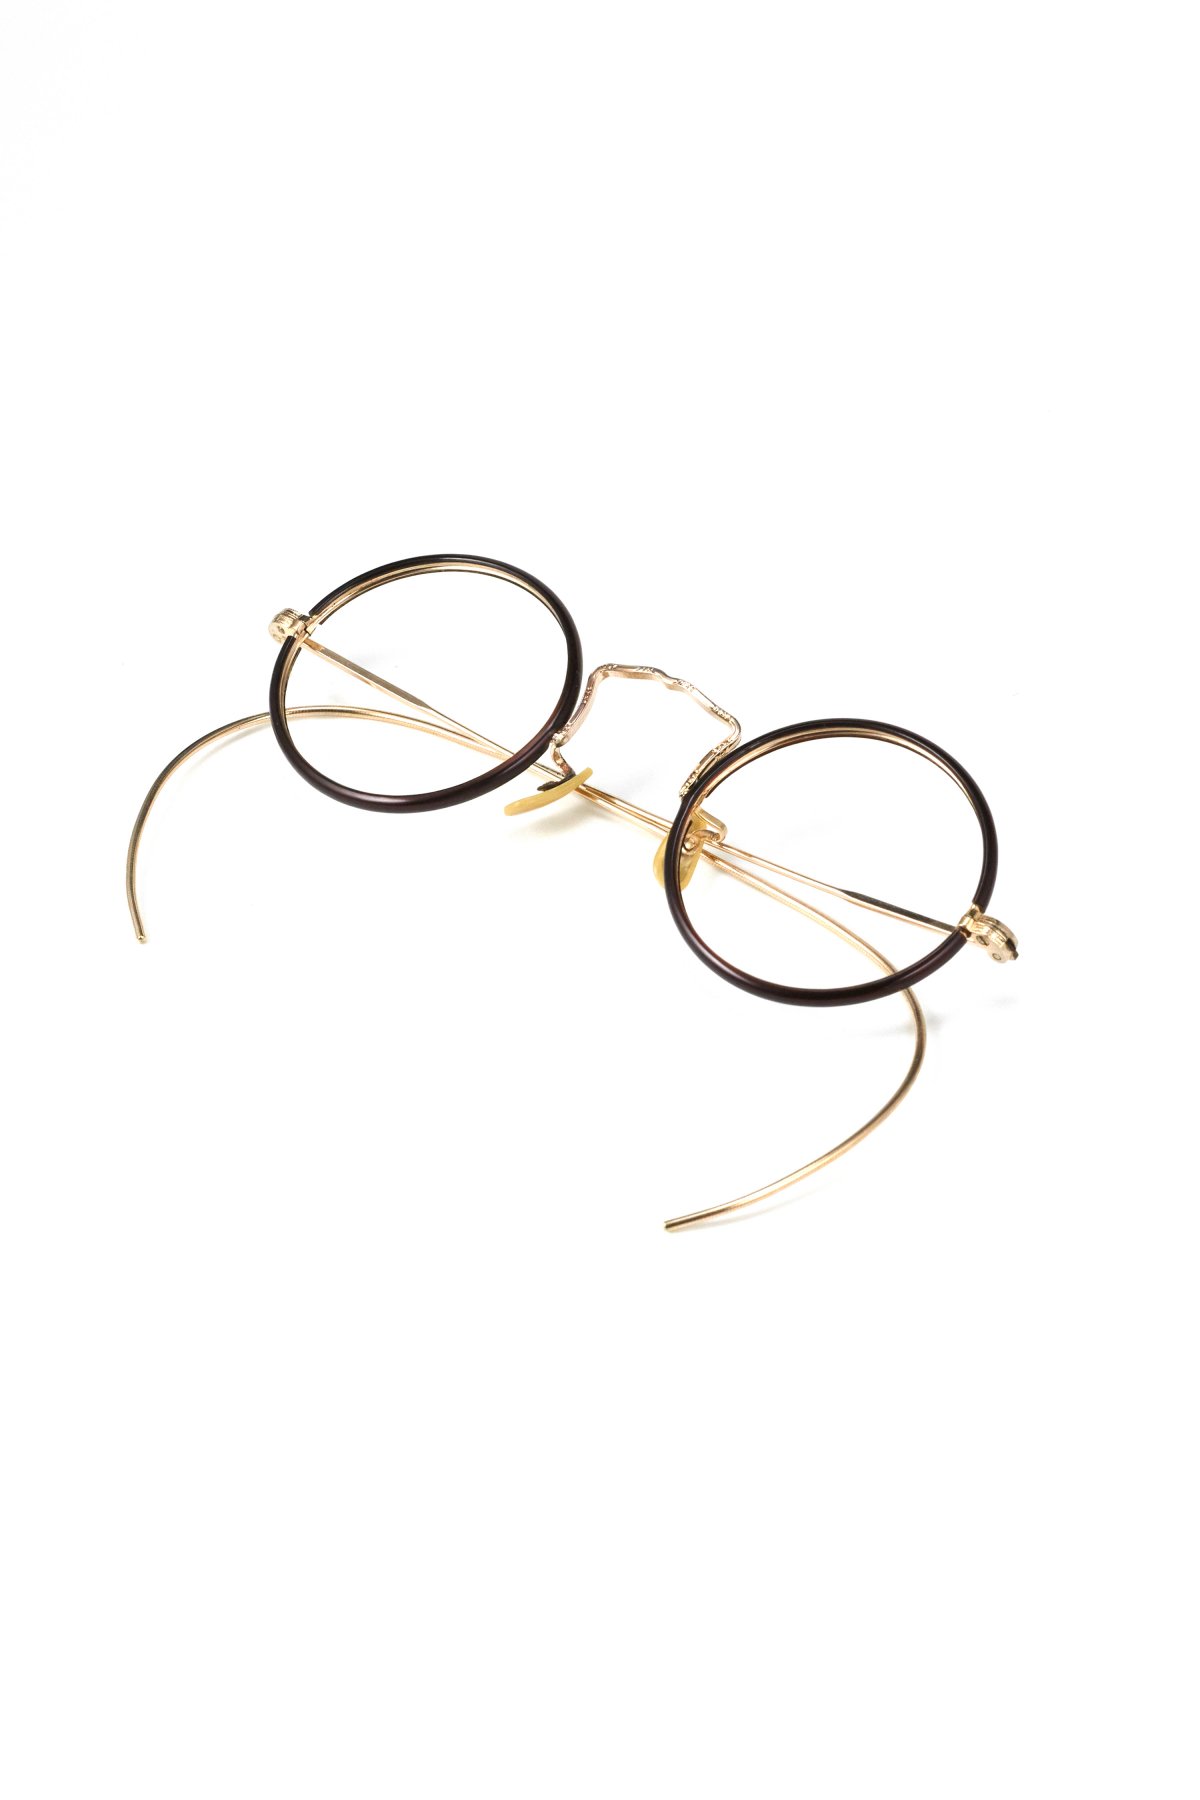 1930s THE HADLEY COMPANY vintage セル巻き眼鏡 - サングラス/メガネ